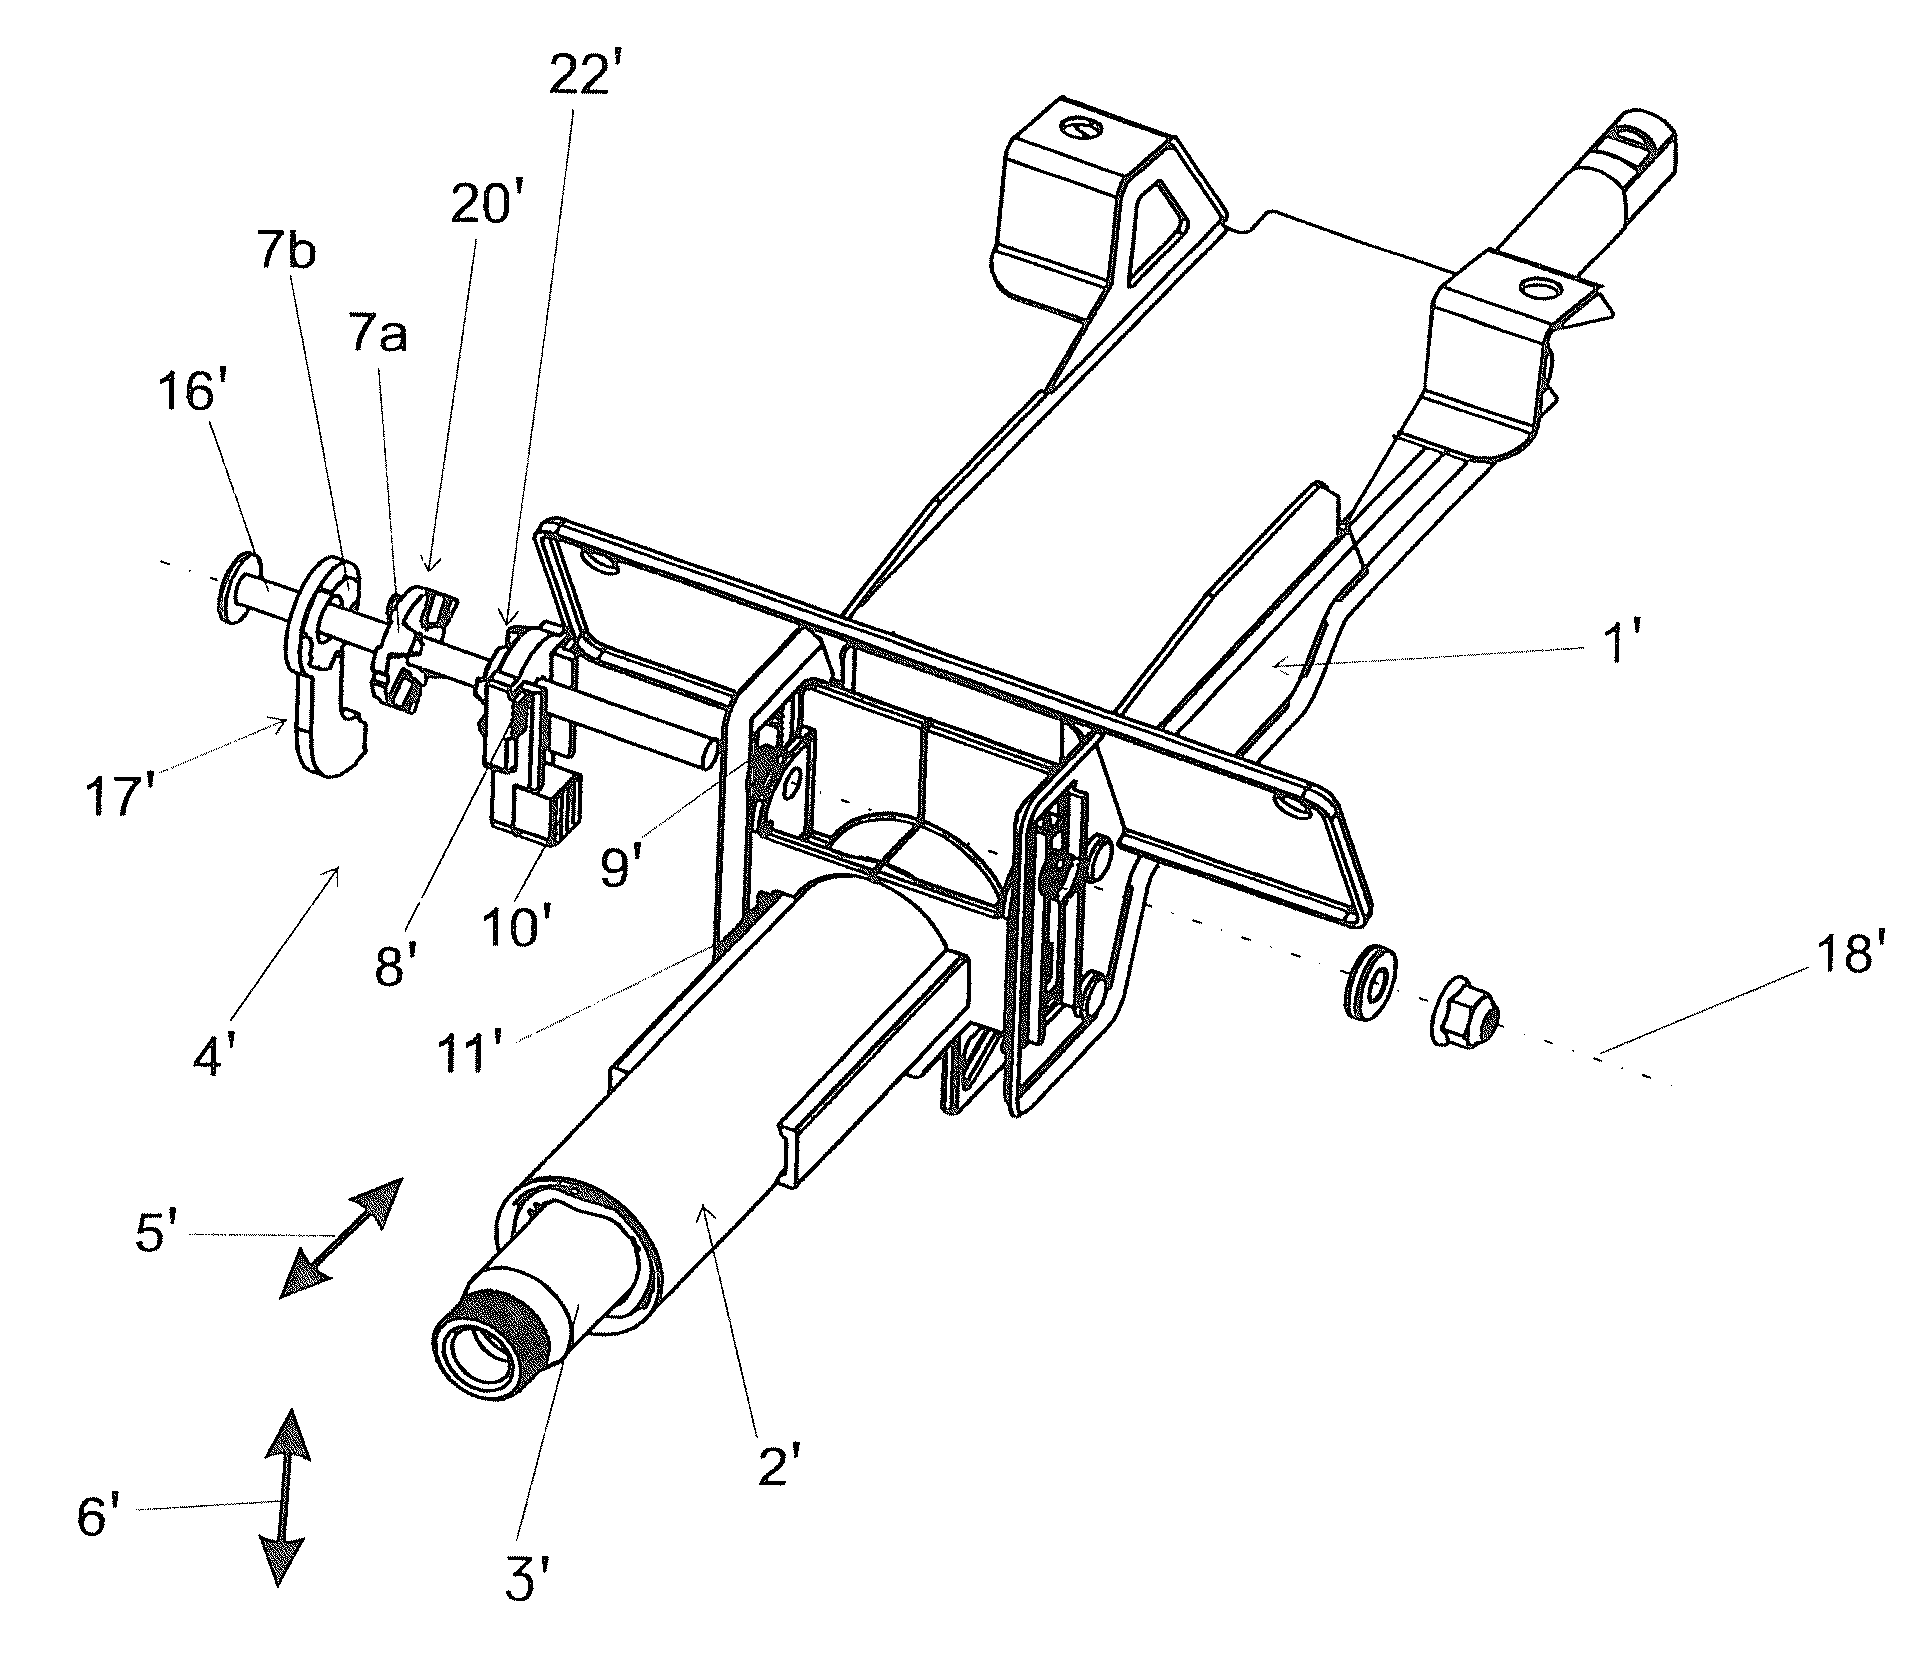 Adjustable steering column for a motor vehicle